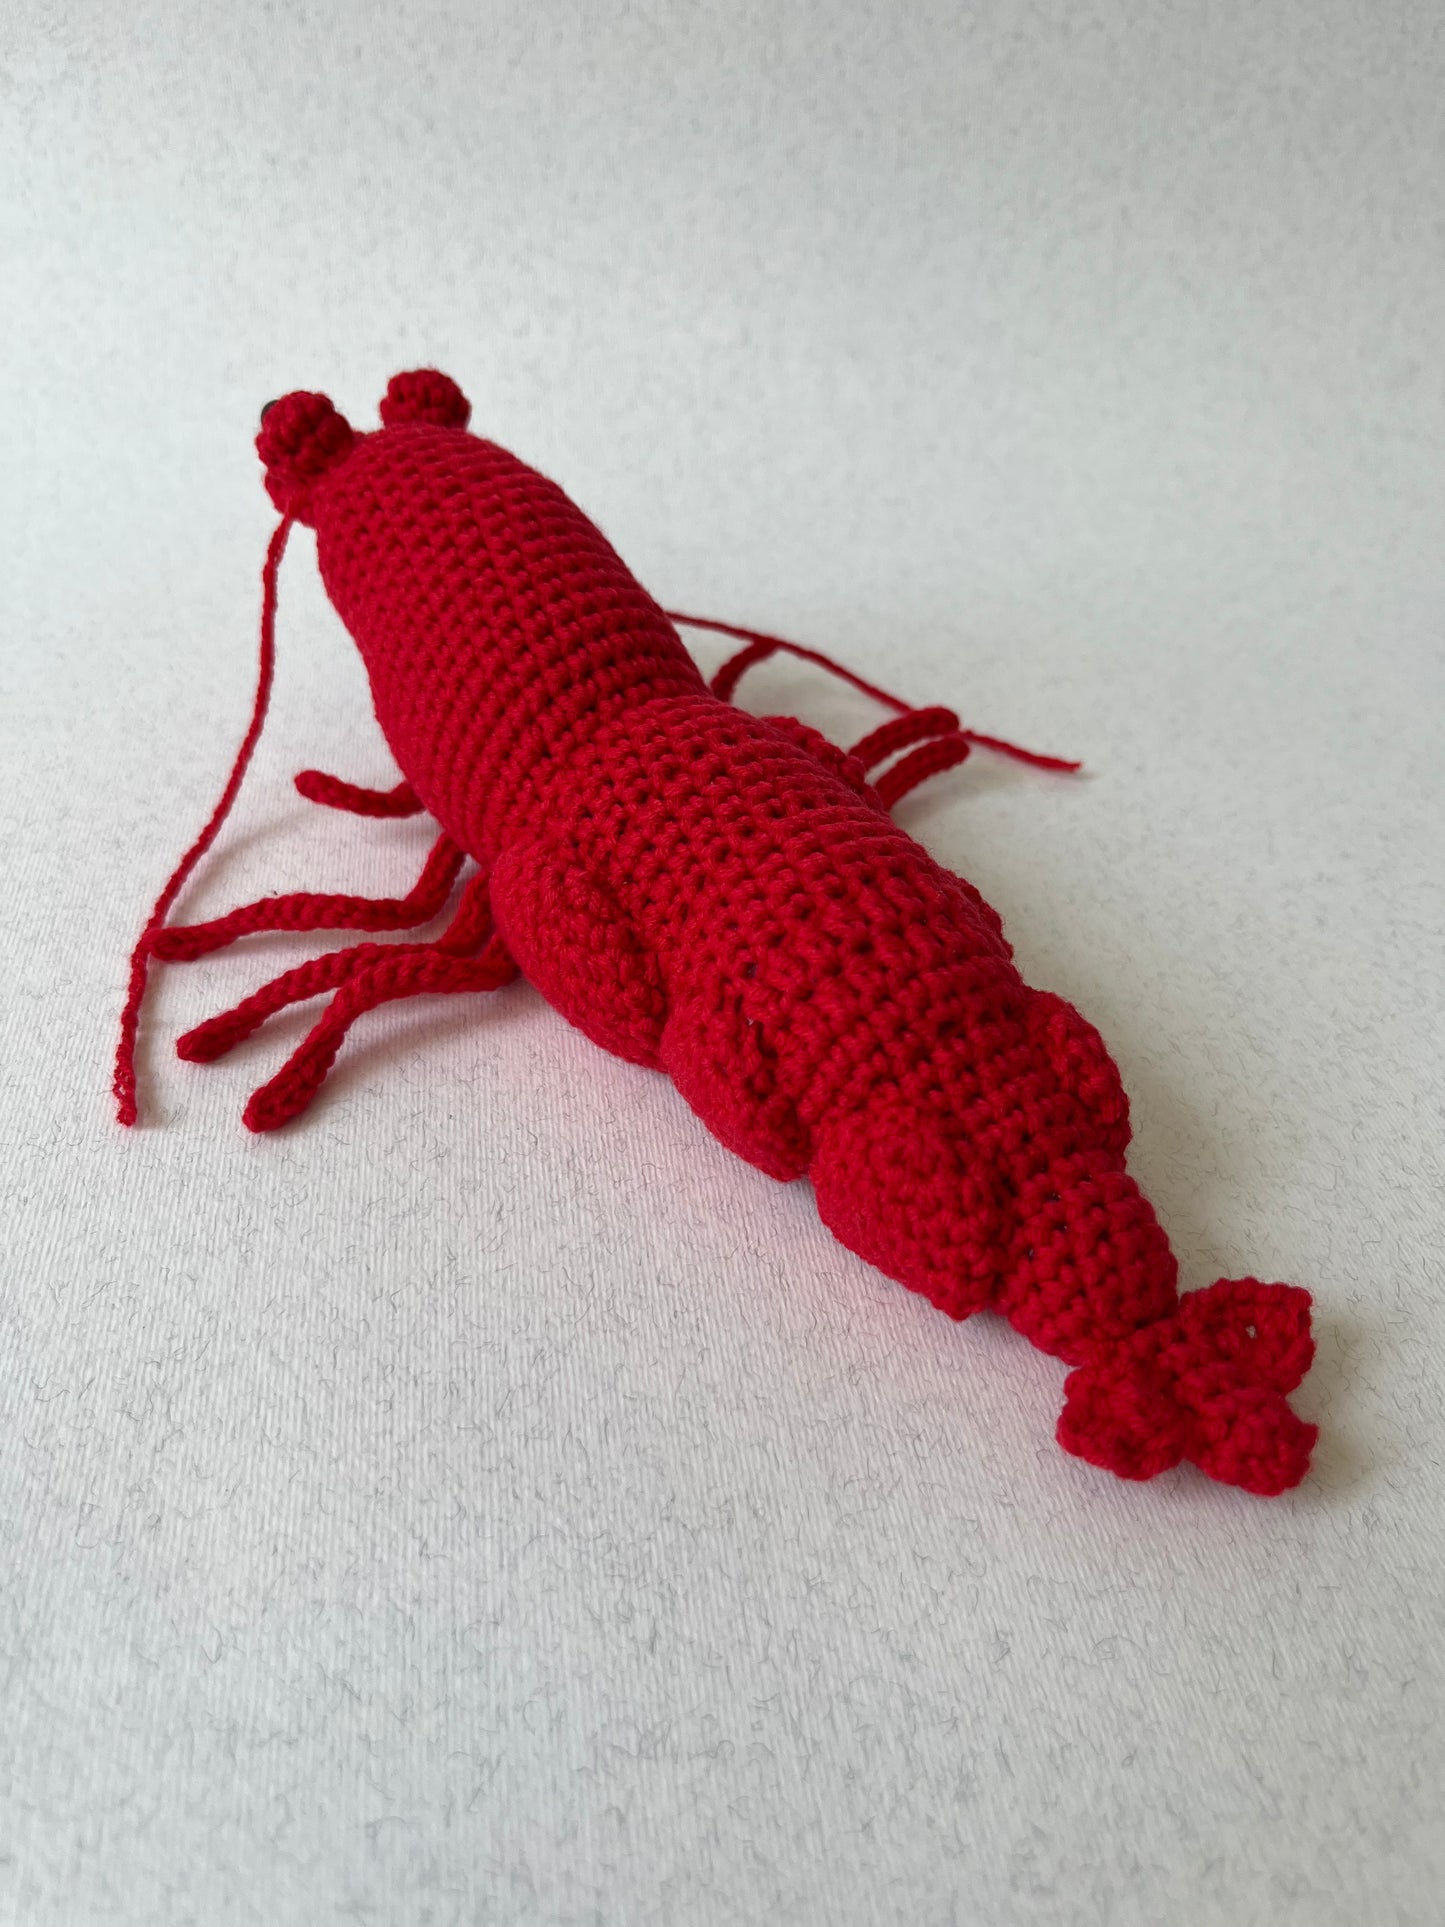 Shrimp or Prawn Crochet Pattern, Amigurumi Shrimp Tutorial